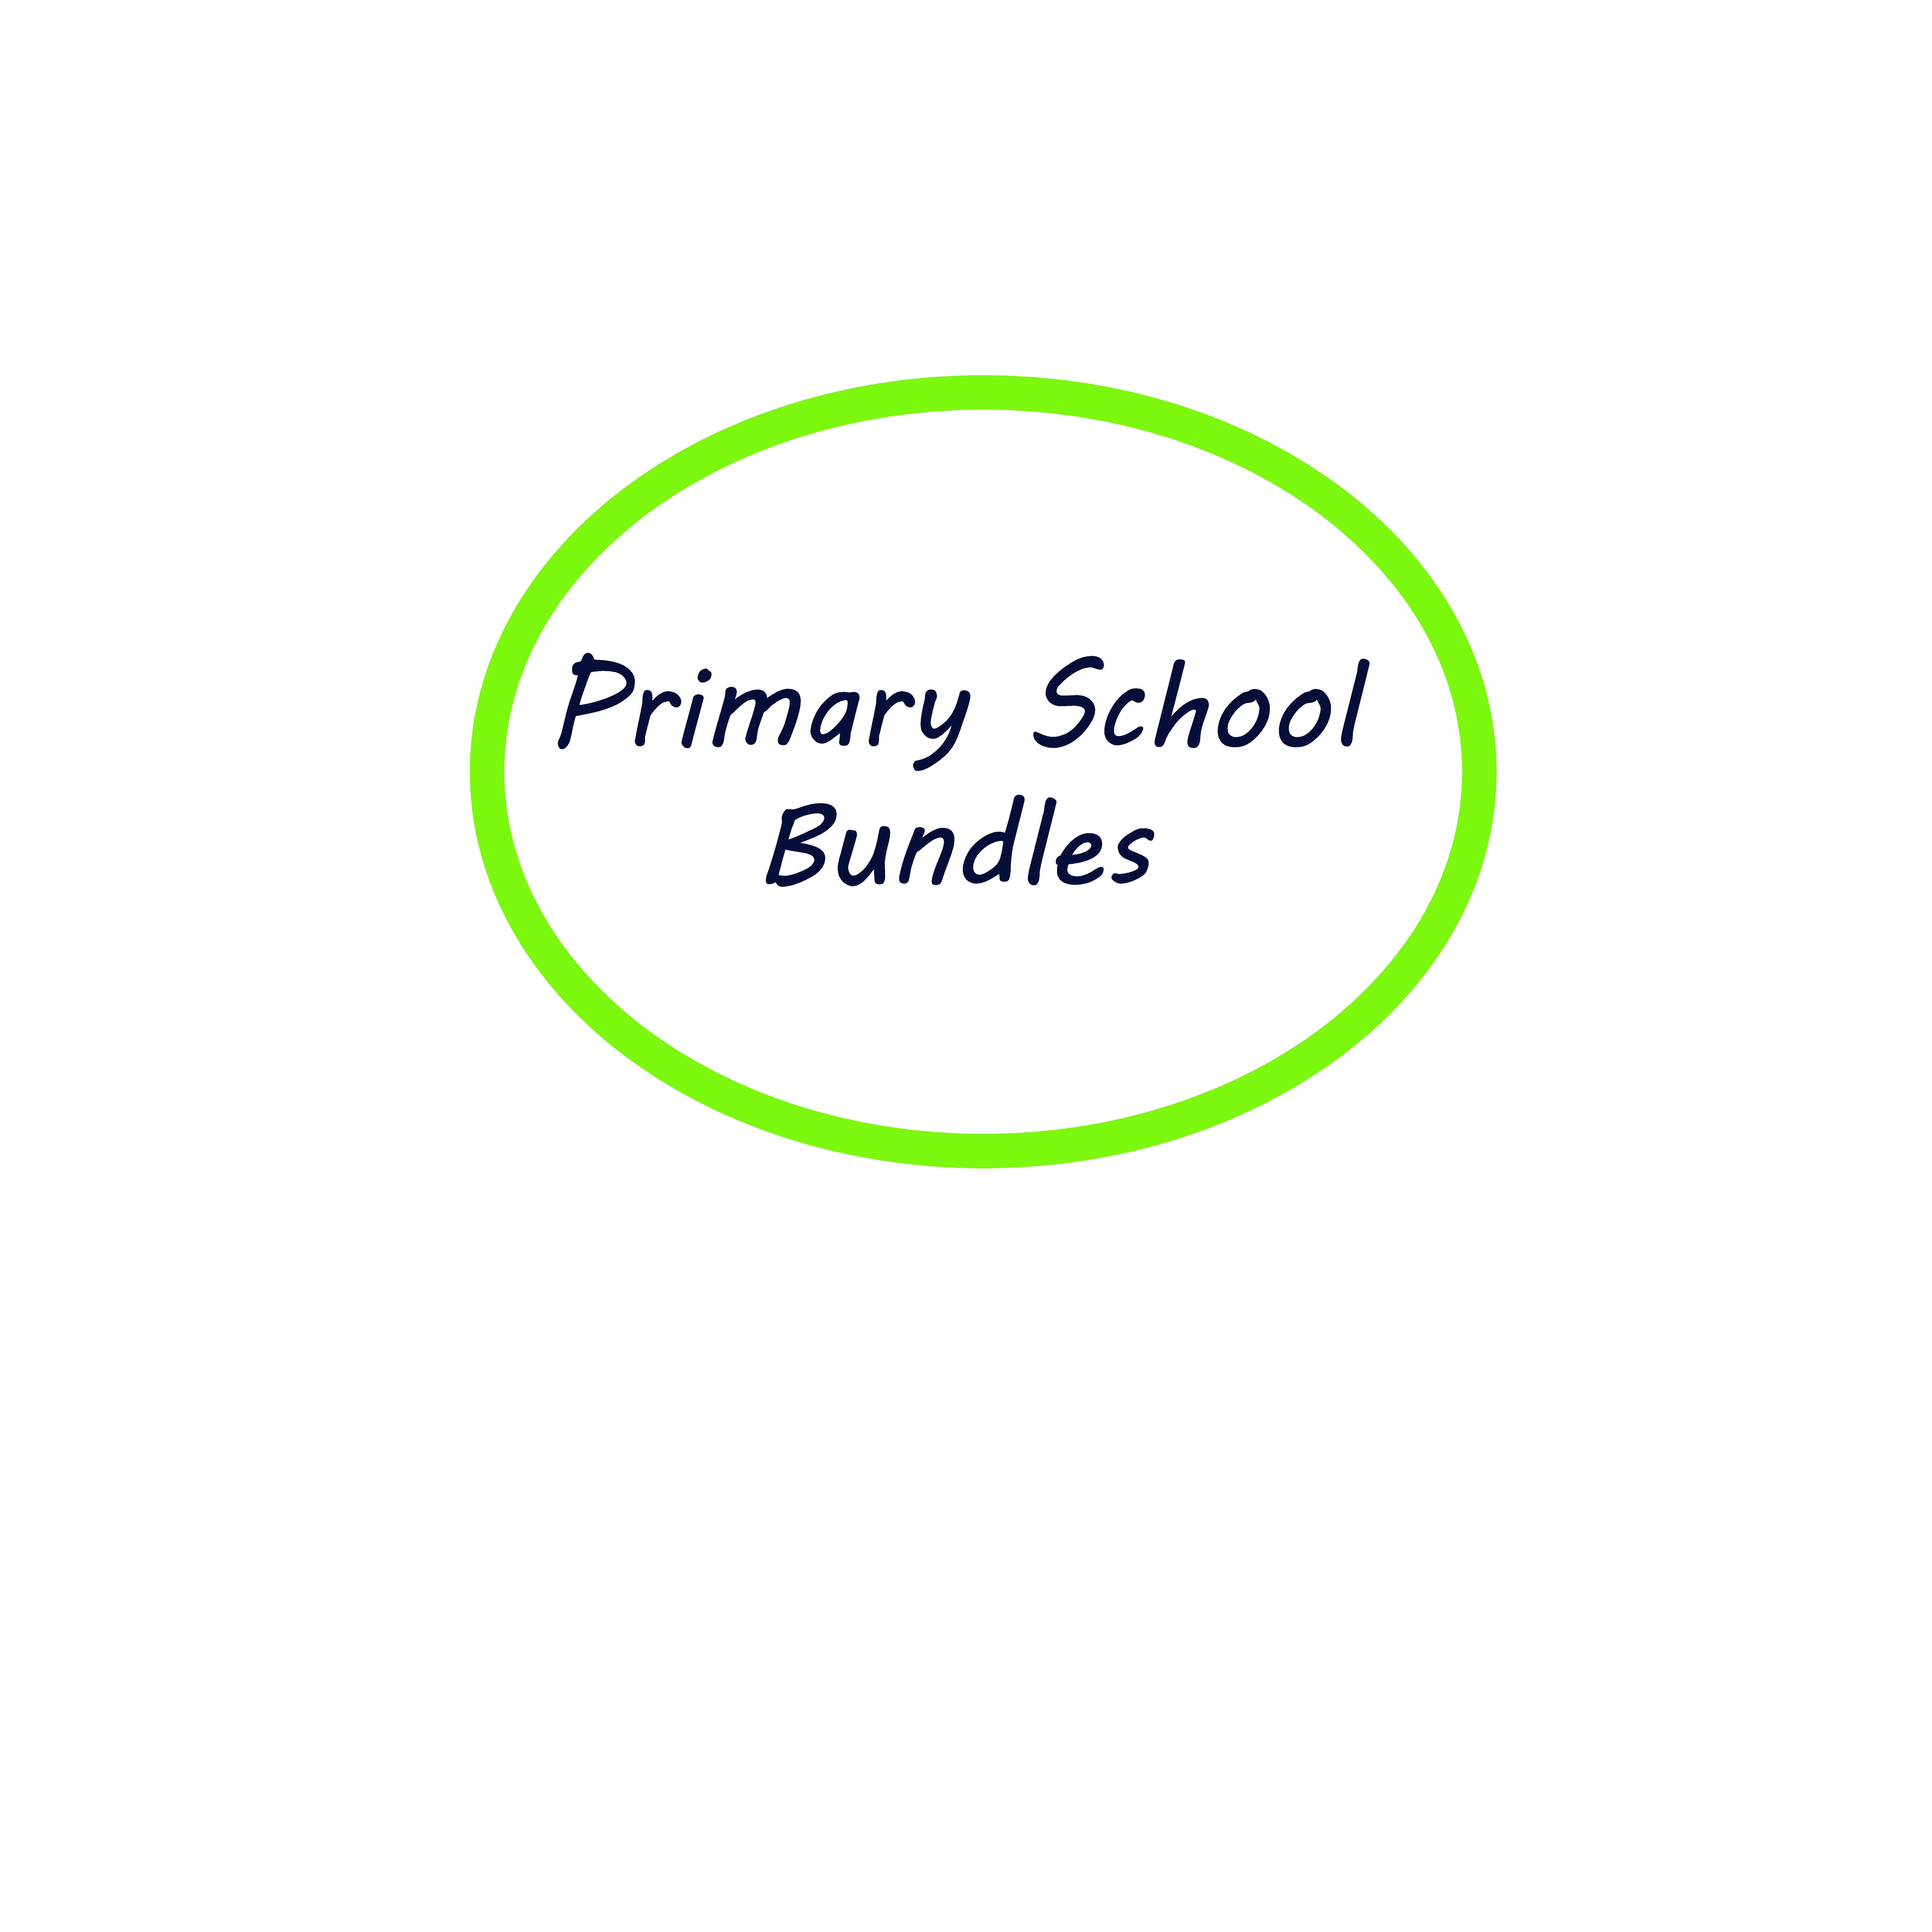 Primary School Bundles